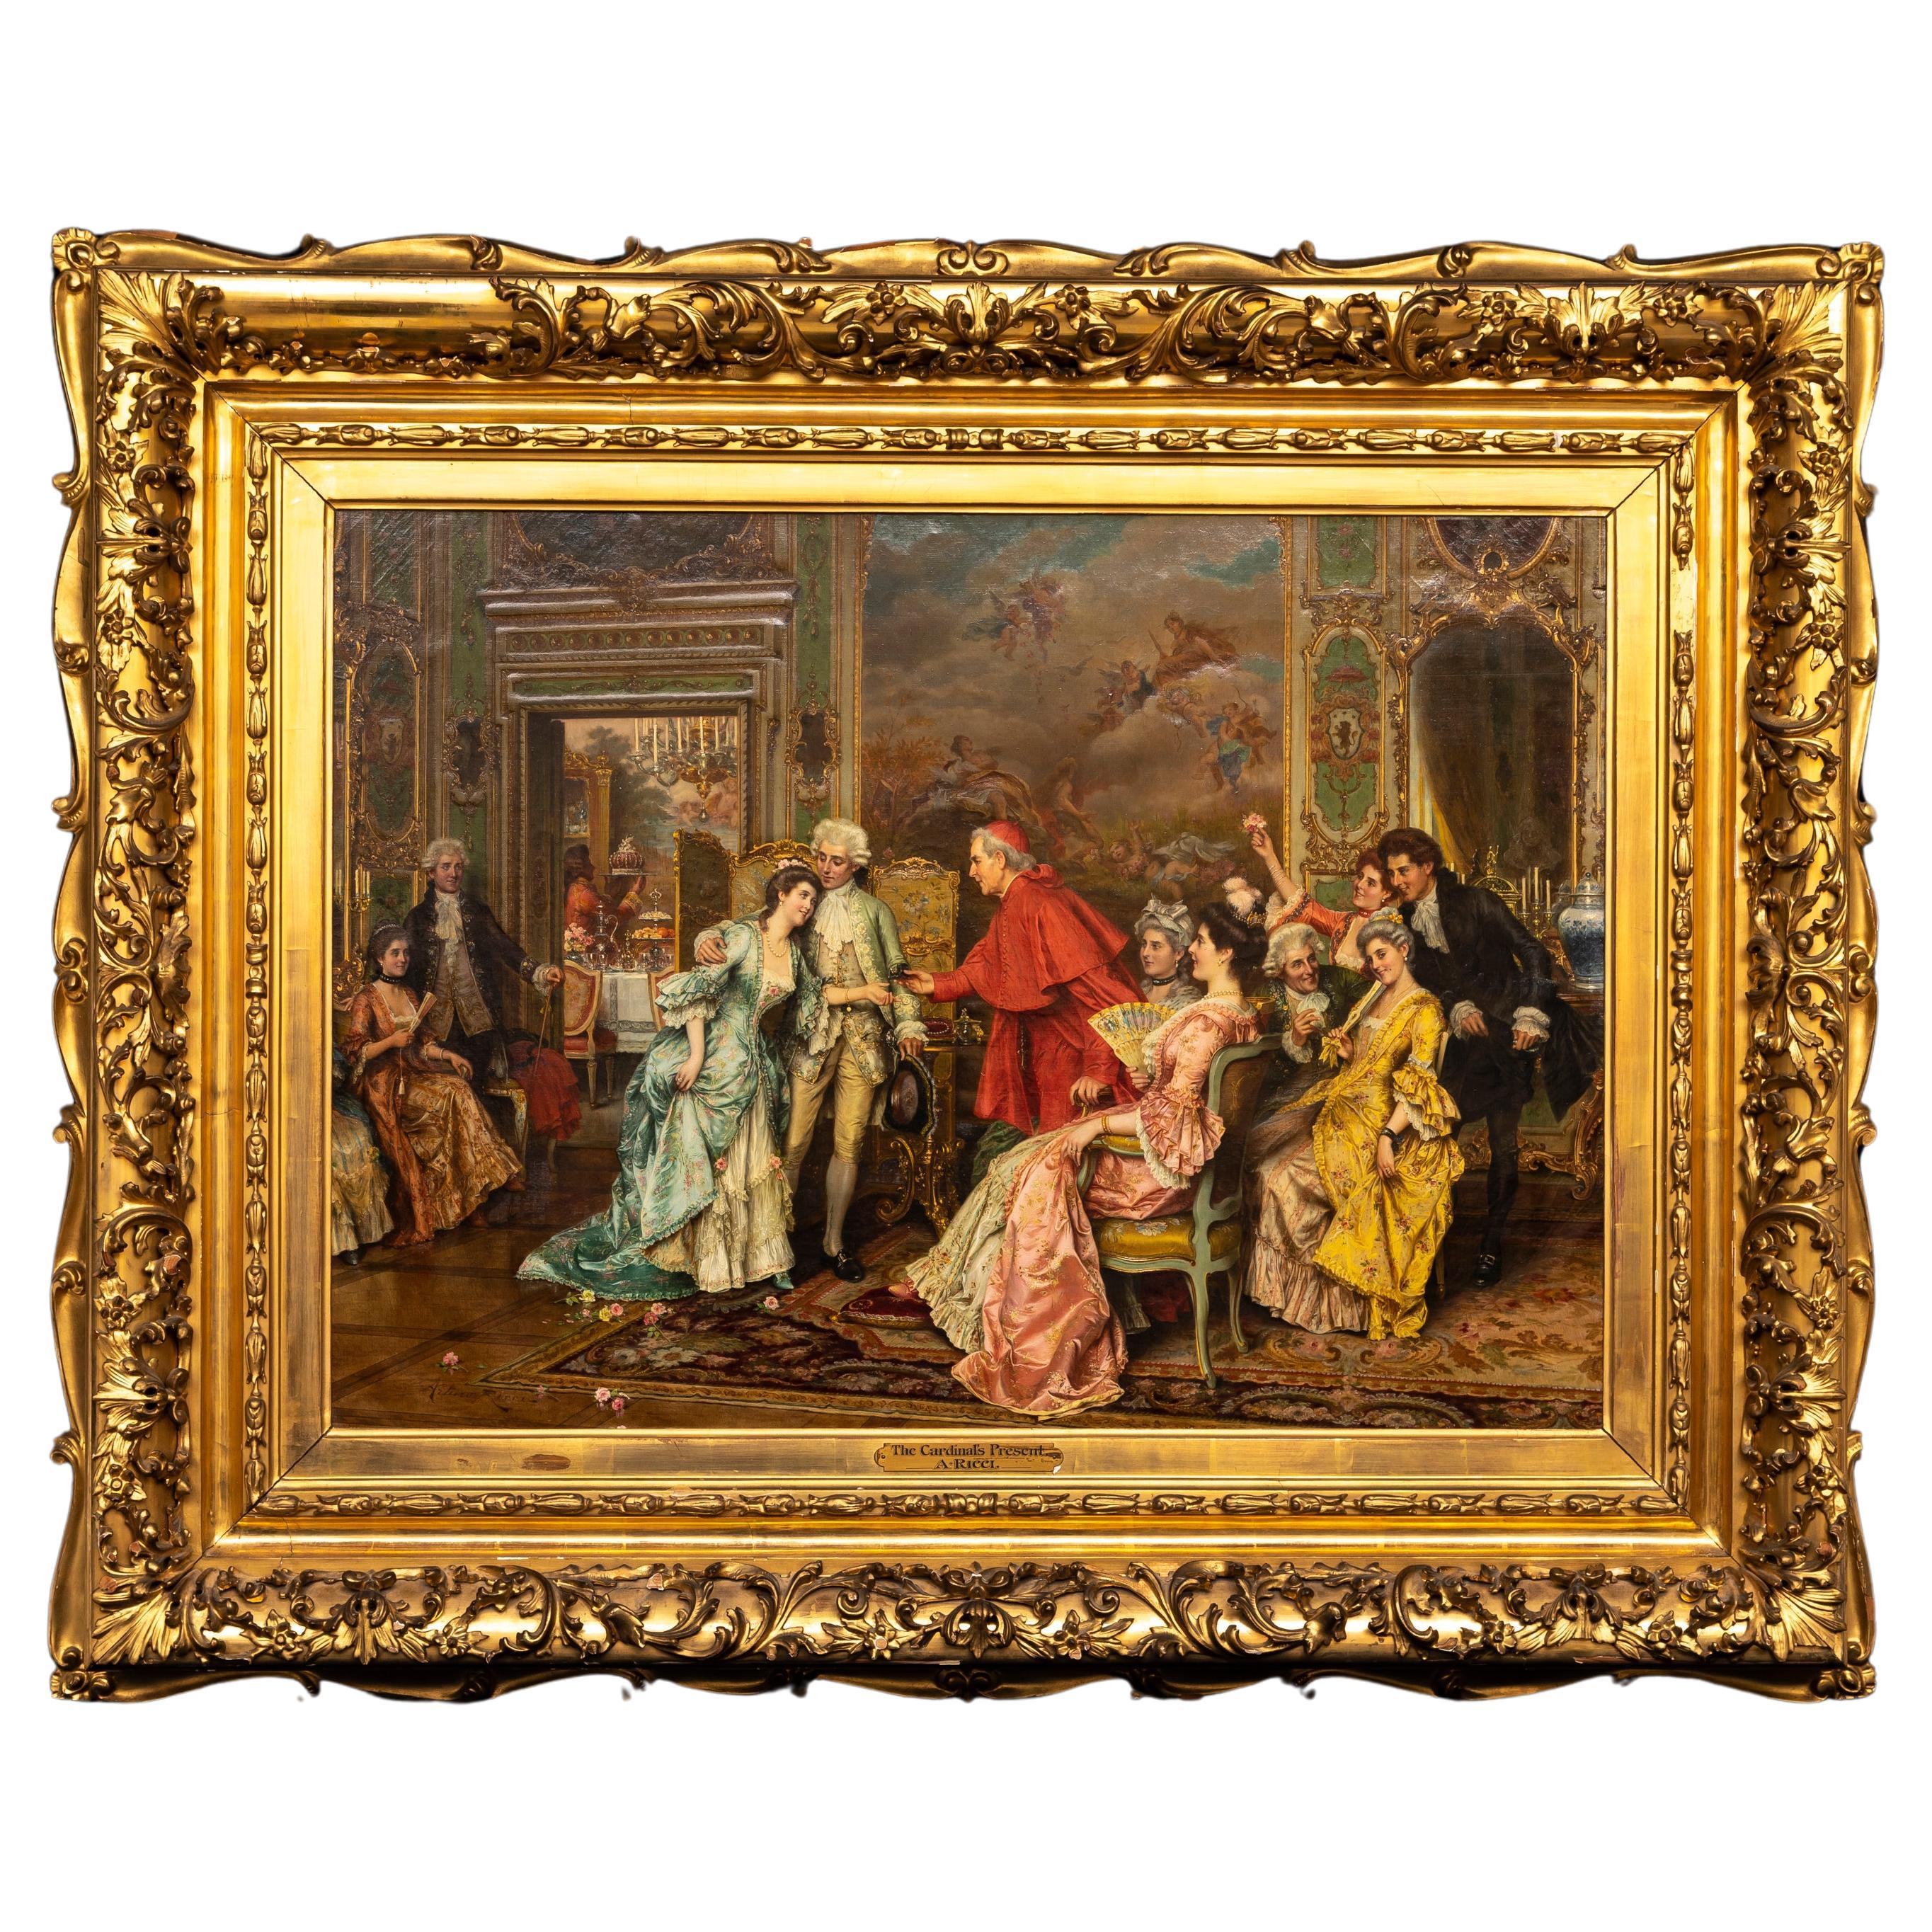 A 19th C. Italian Oil on Canvas "The Cardinal's Present" by Arturo Ricci For Sale